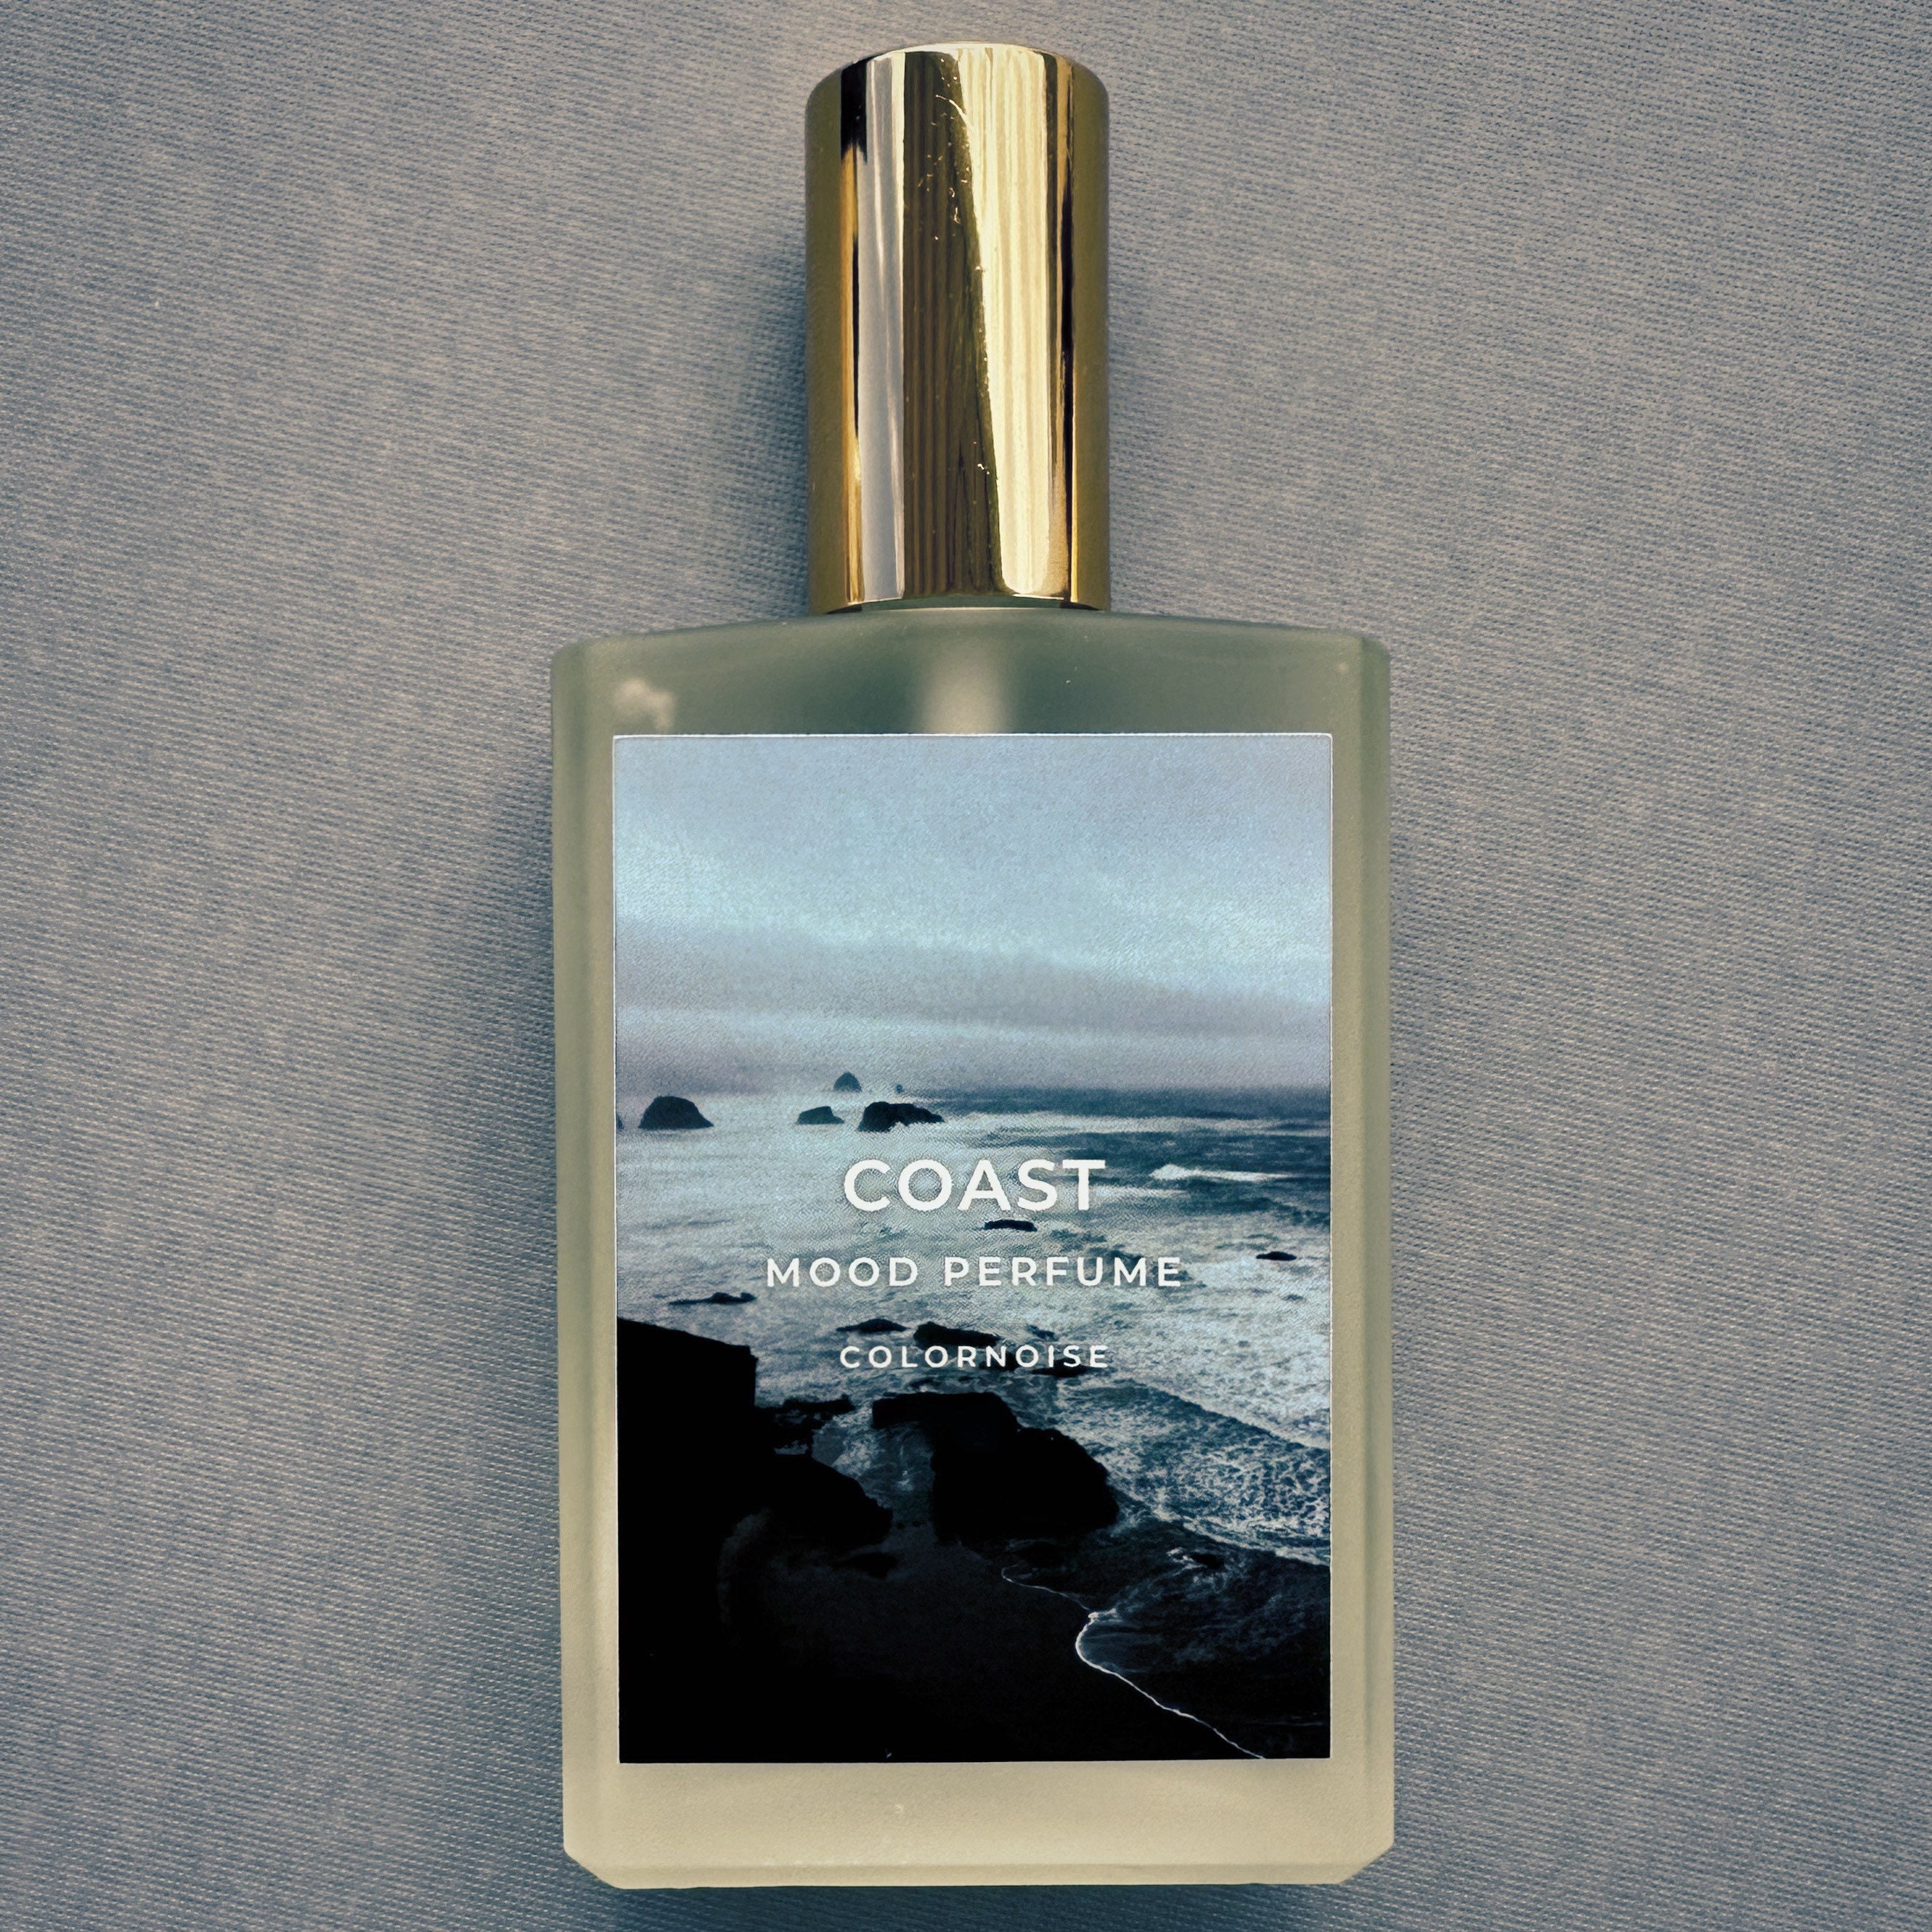 10ML LV sun song perfume, Beauty & Personal Care, Fragrance